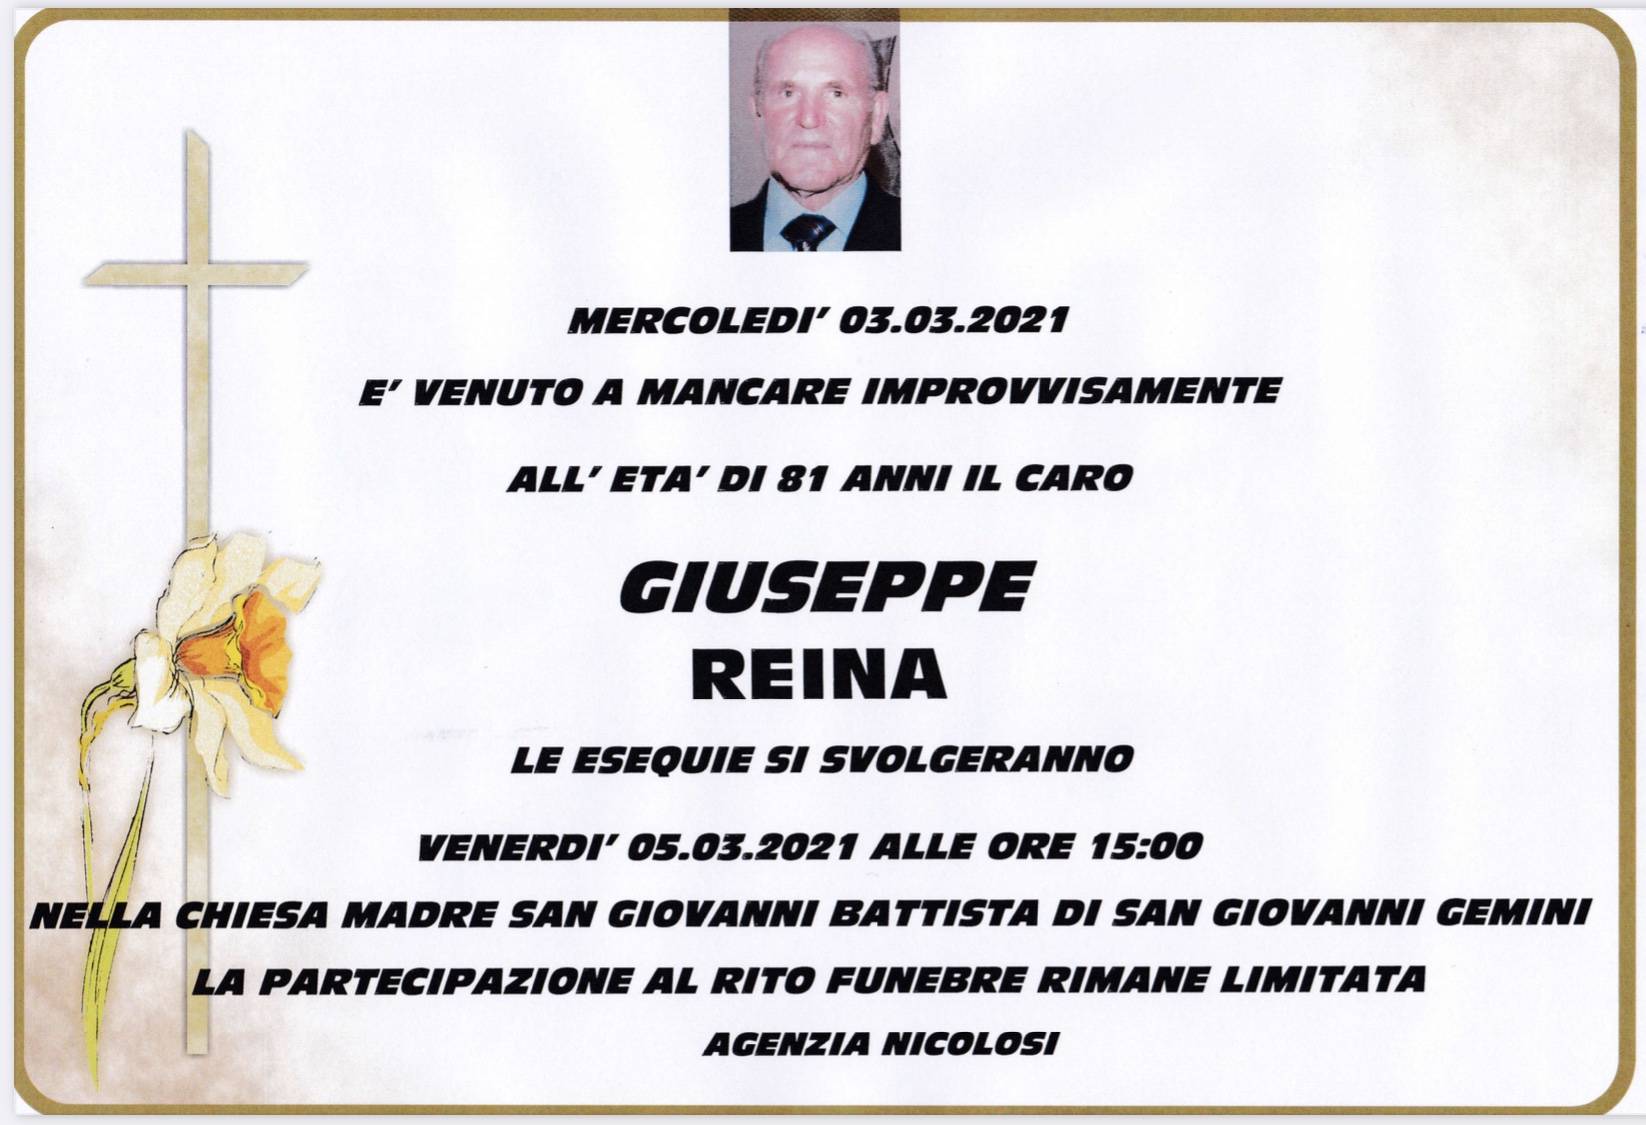 Giuseppe Reina